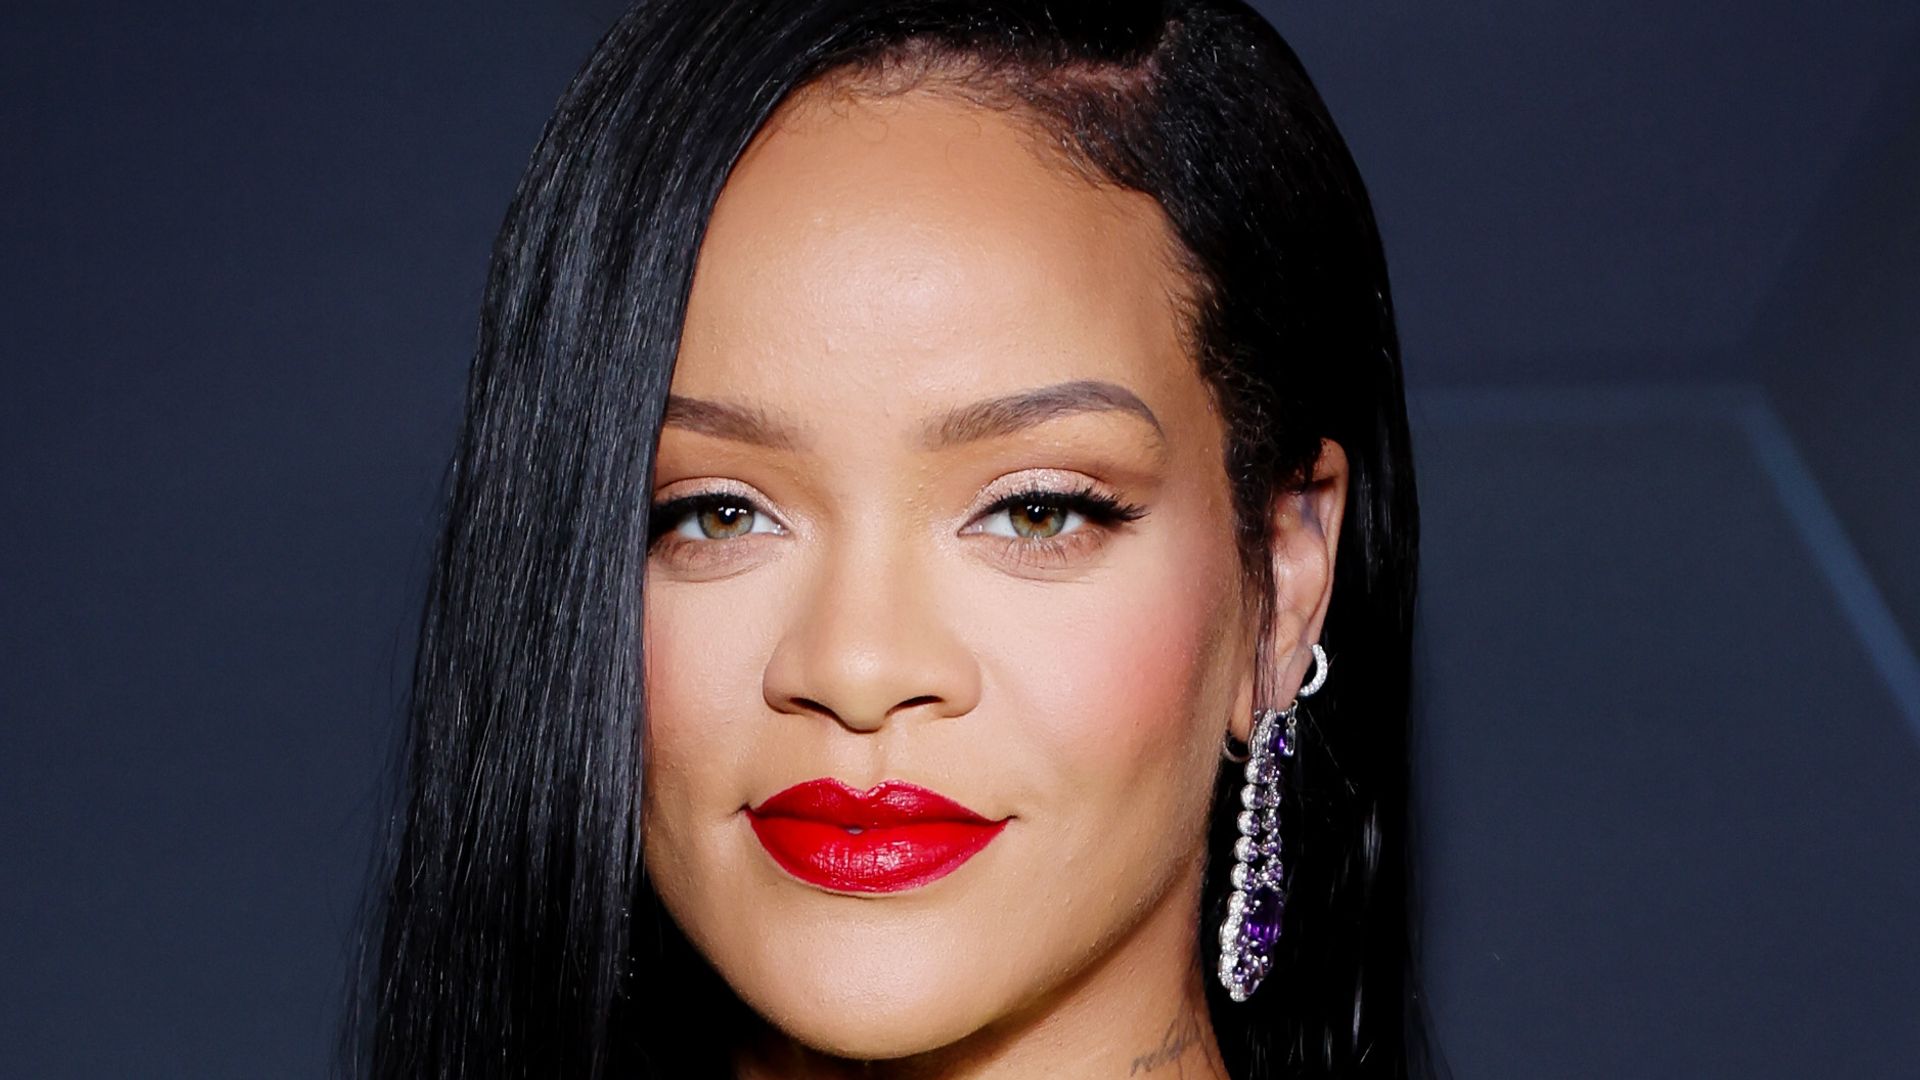 Rihanna attending a Fenty Beauty launch